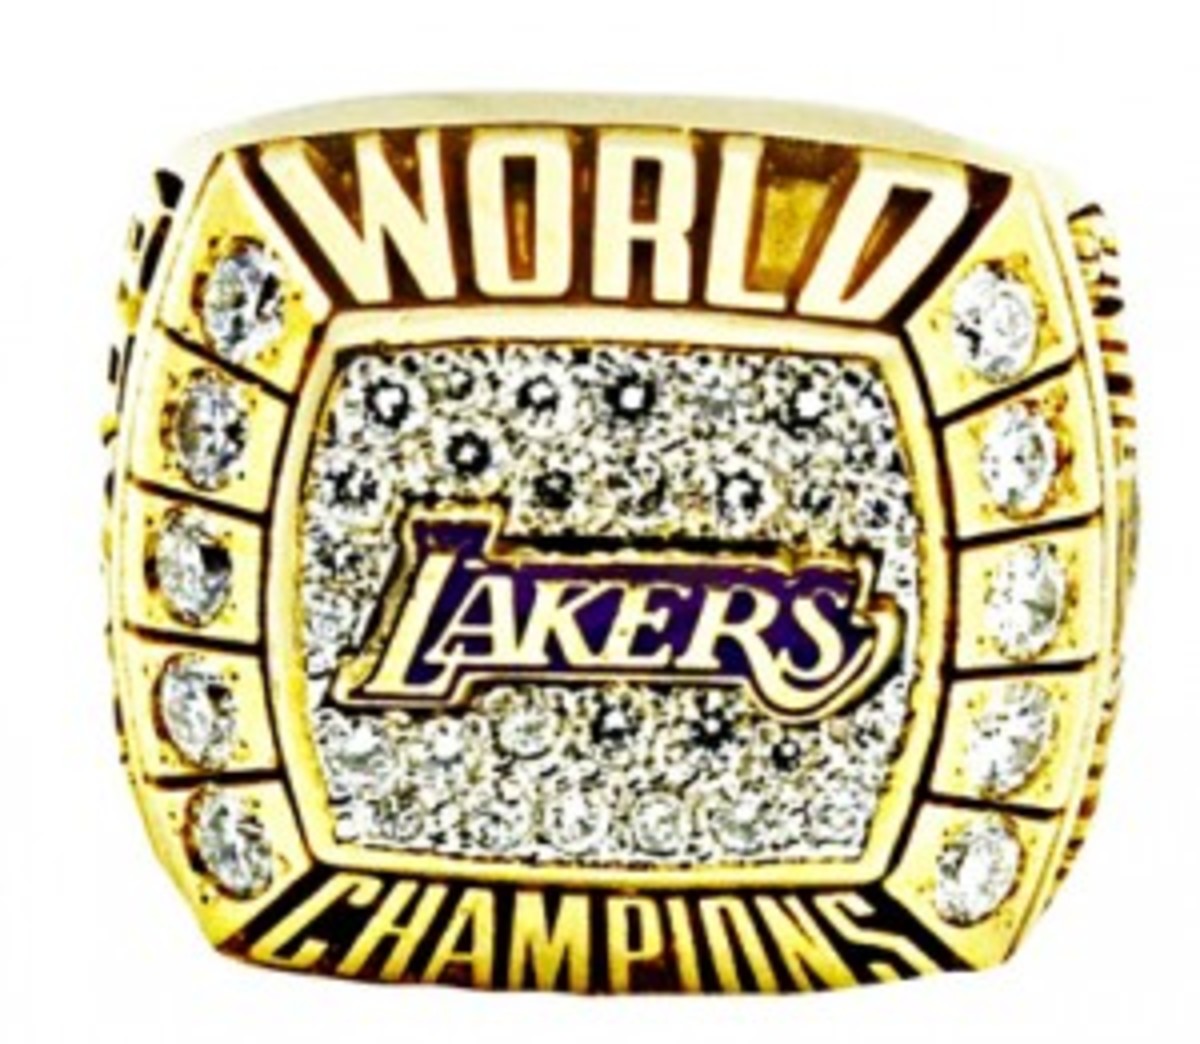 Kobe Bryant 2000 Lakers NBA Championship Ring 14K-40 Diamonds (Laker Issued Player Ring Gifted by Kobe to Joe Bryant - size 11 ½ - same as Kobe's) - $174,184